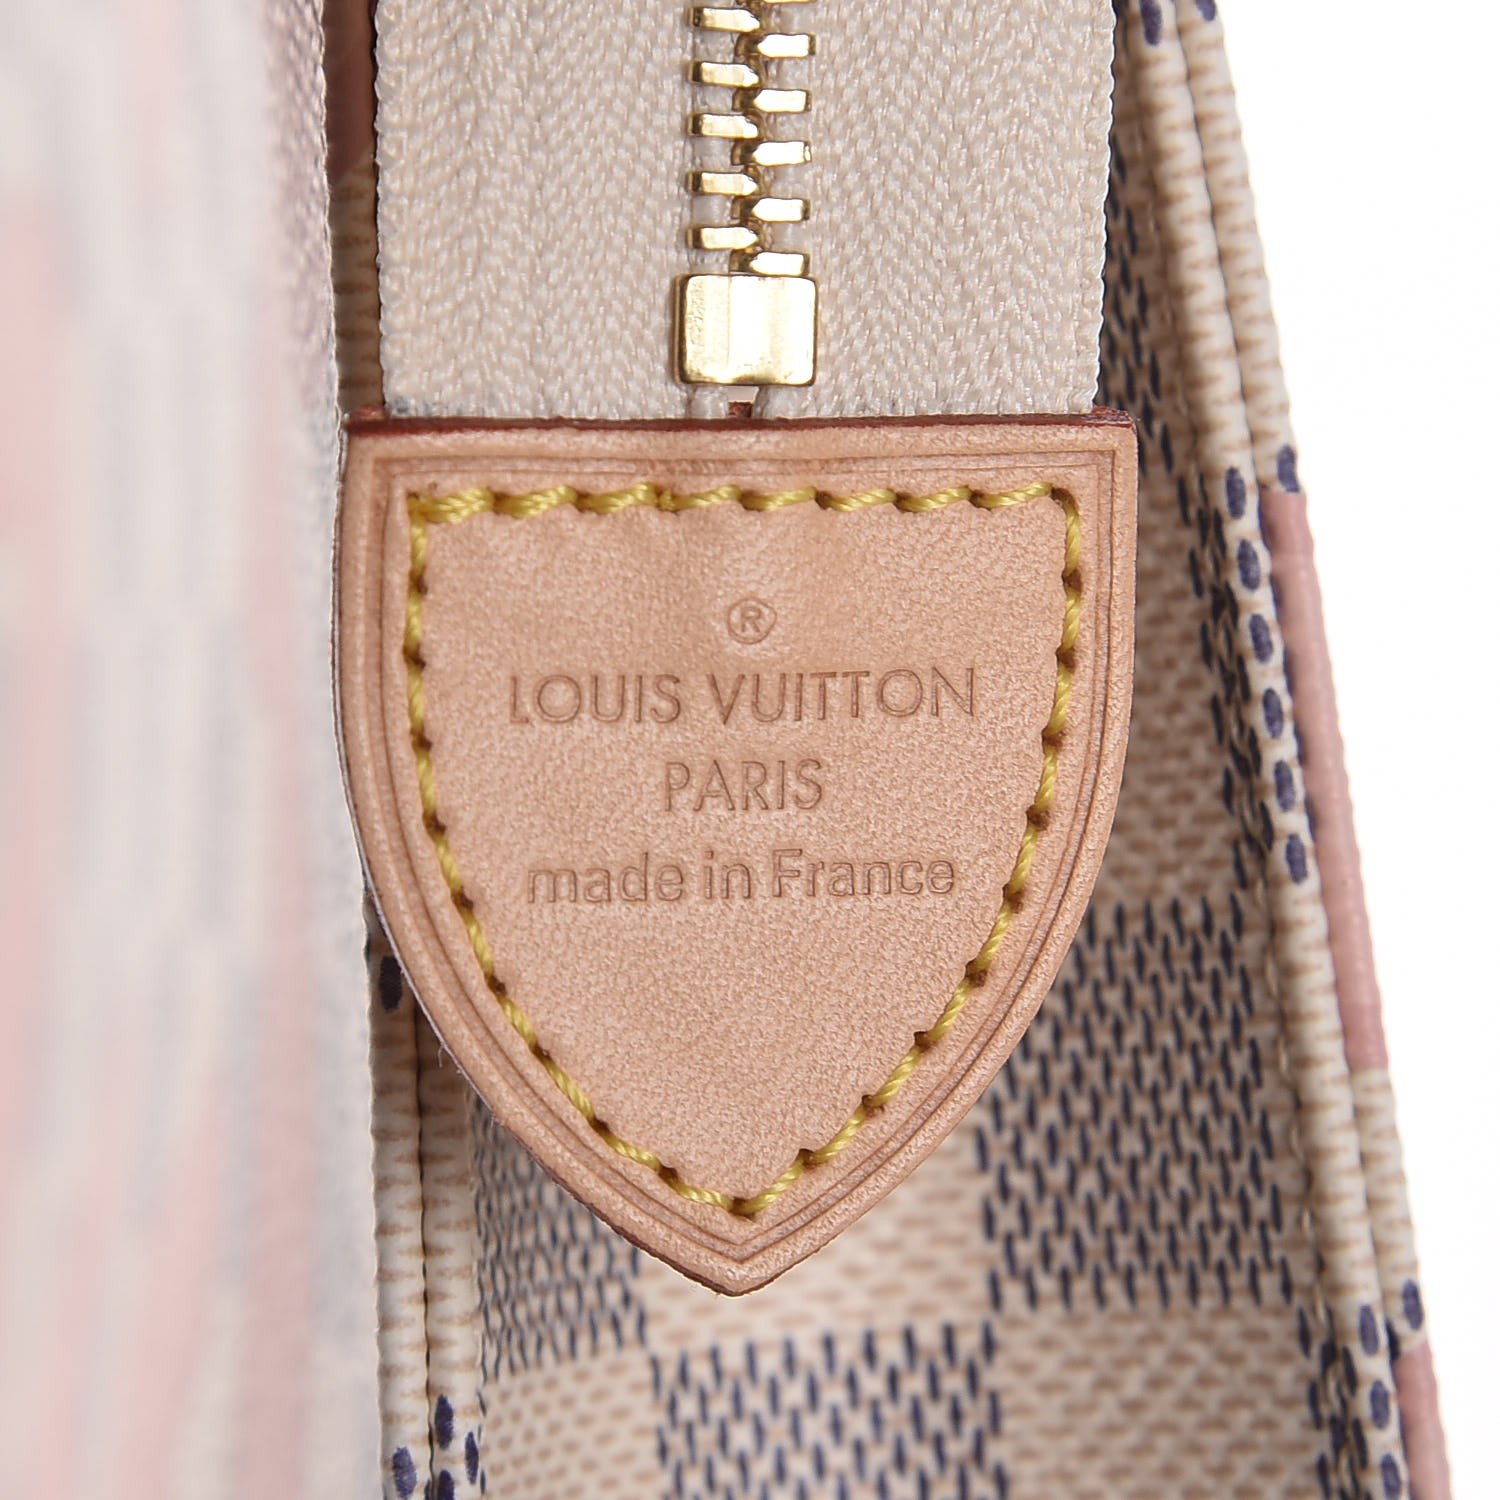 Louis Vuitton Slides Fur  Natural Resource Department